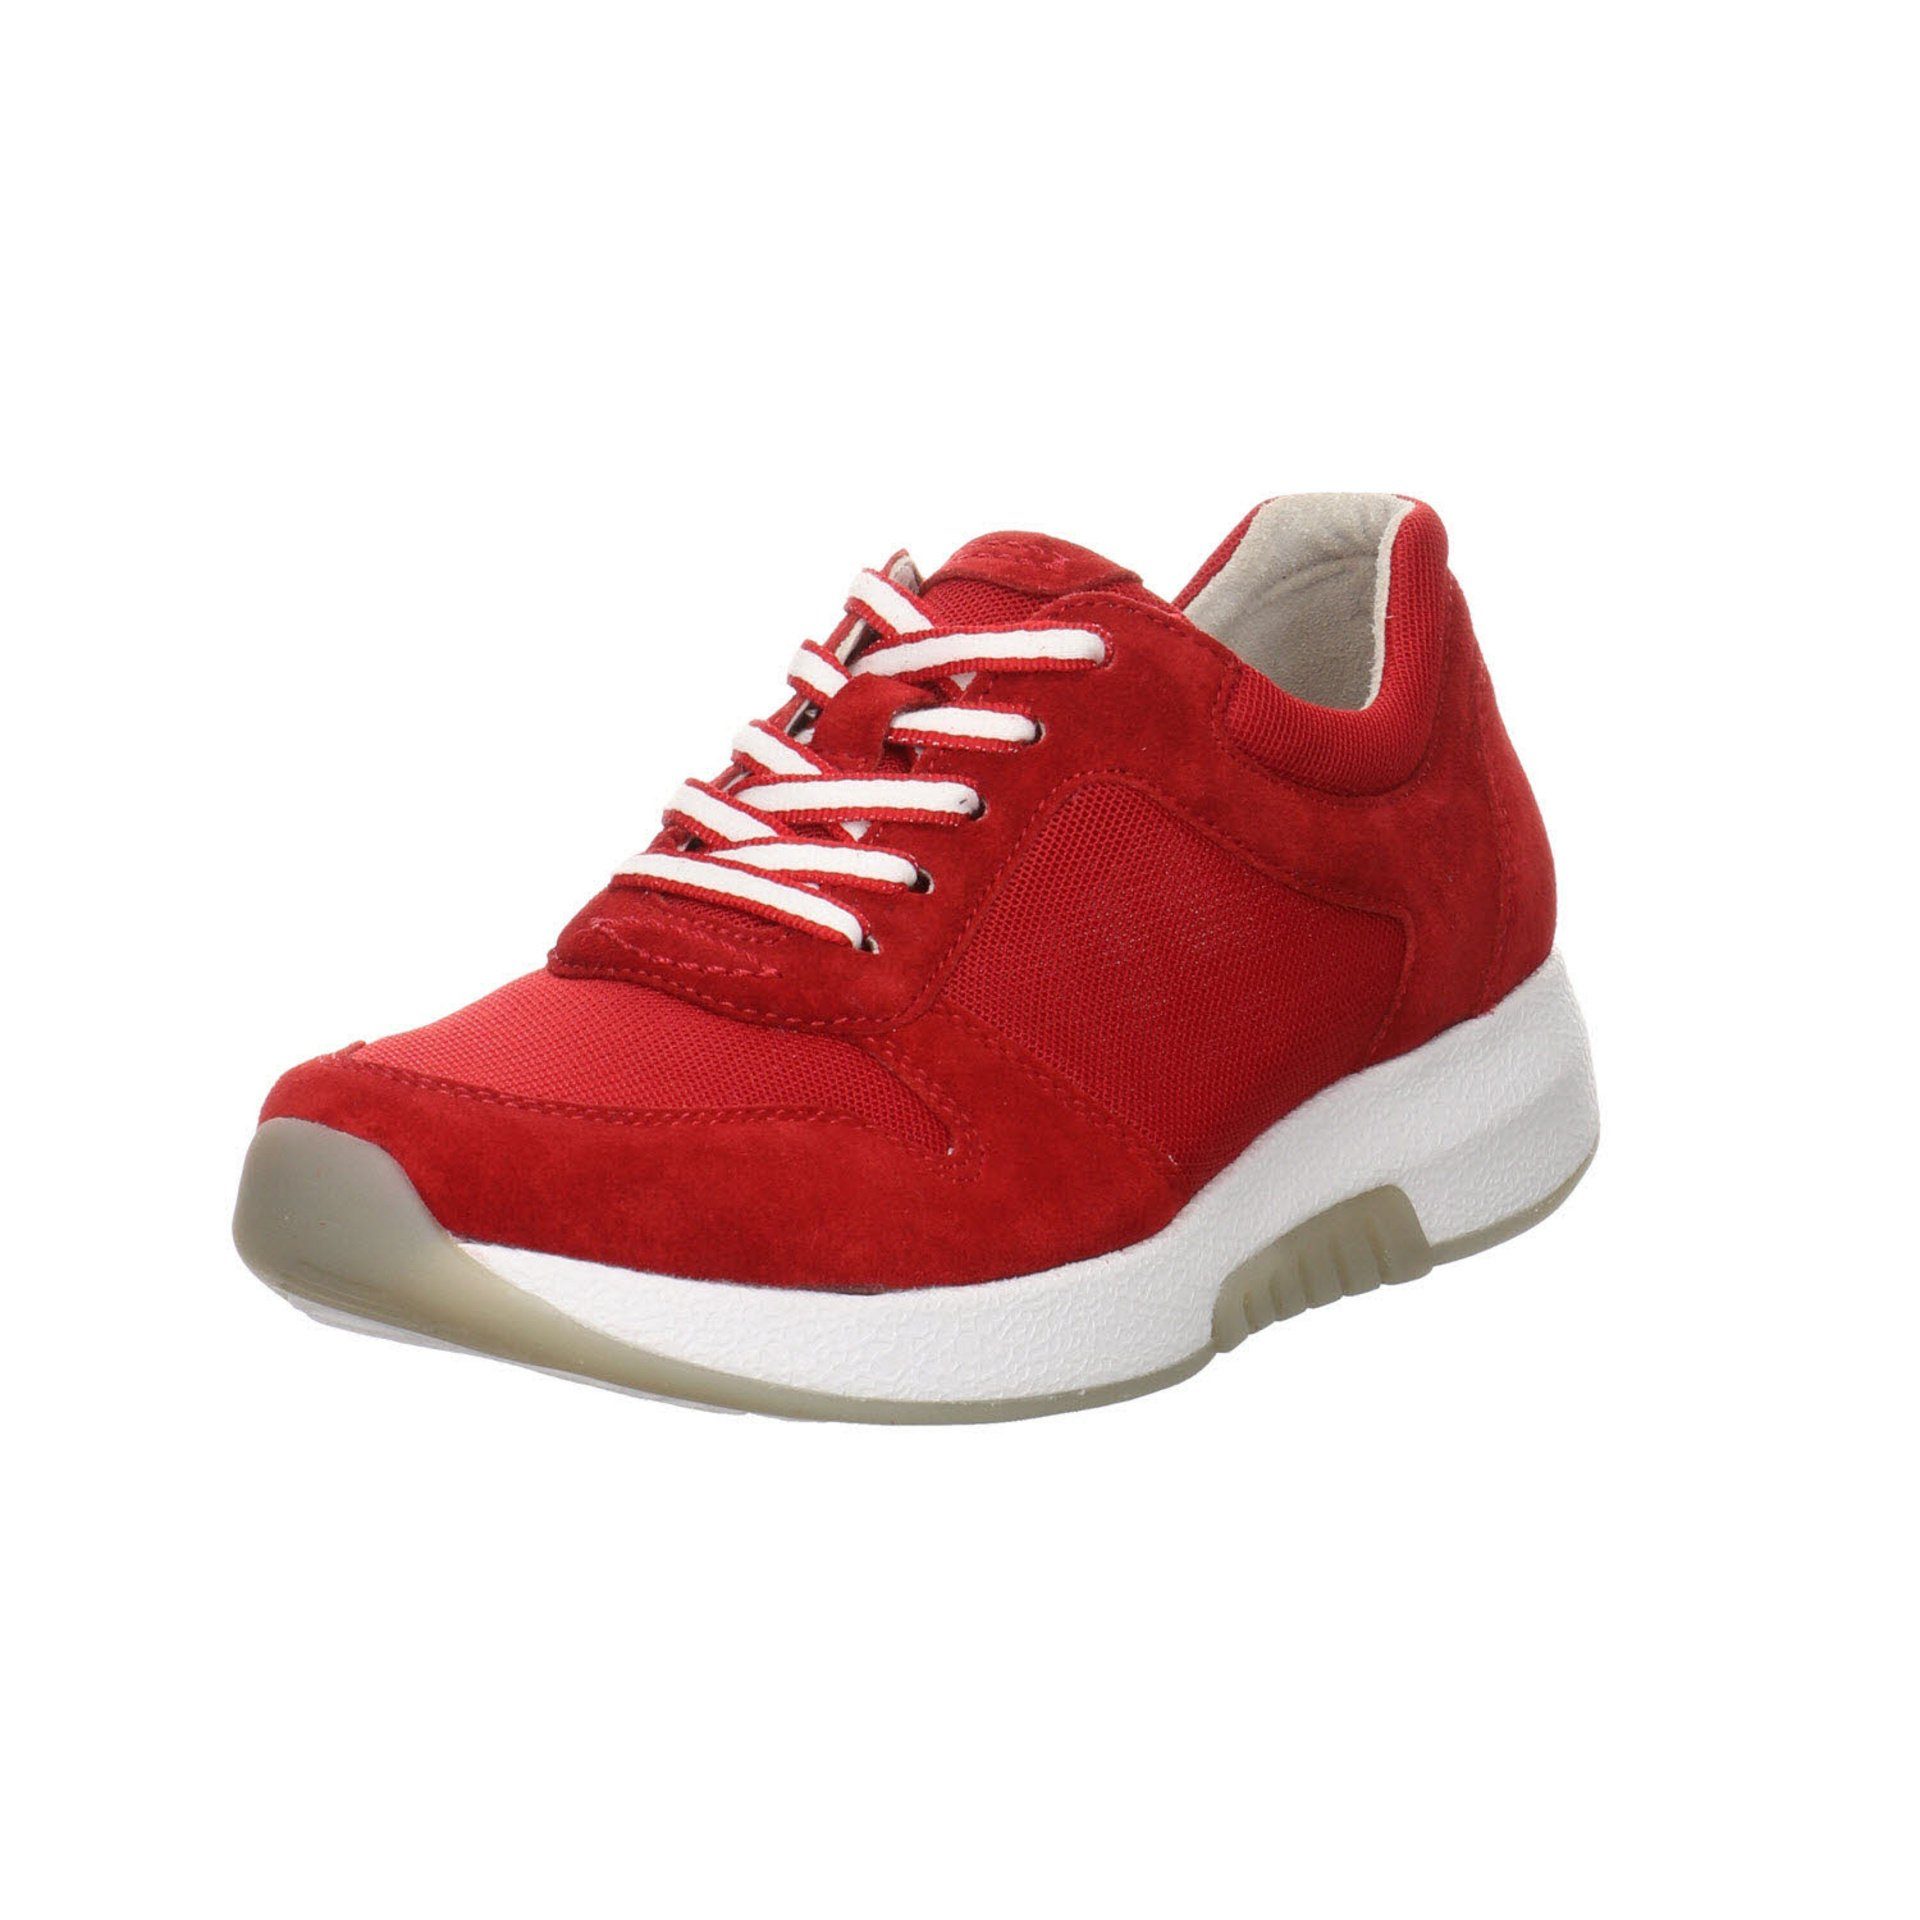 Gabor Damen Sneaker Schuhe Rollingsoft Schnürschuh Schnürschuh Lederkombination red